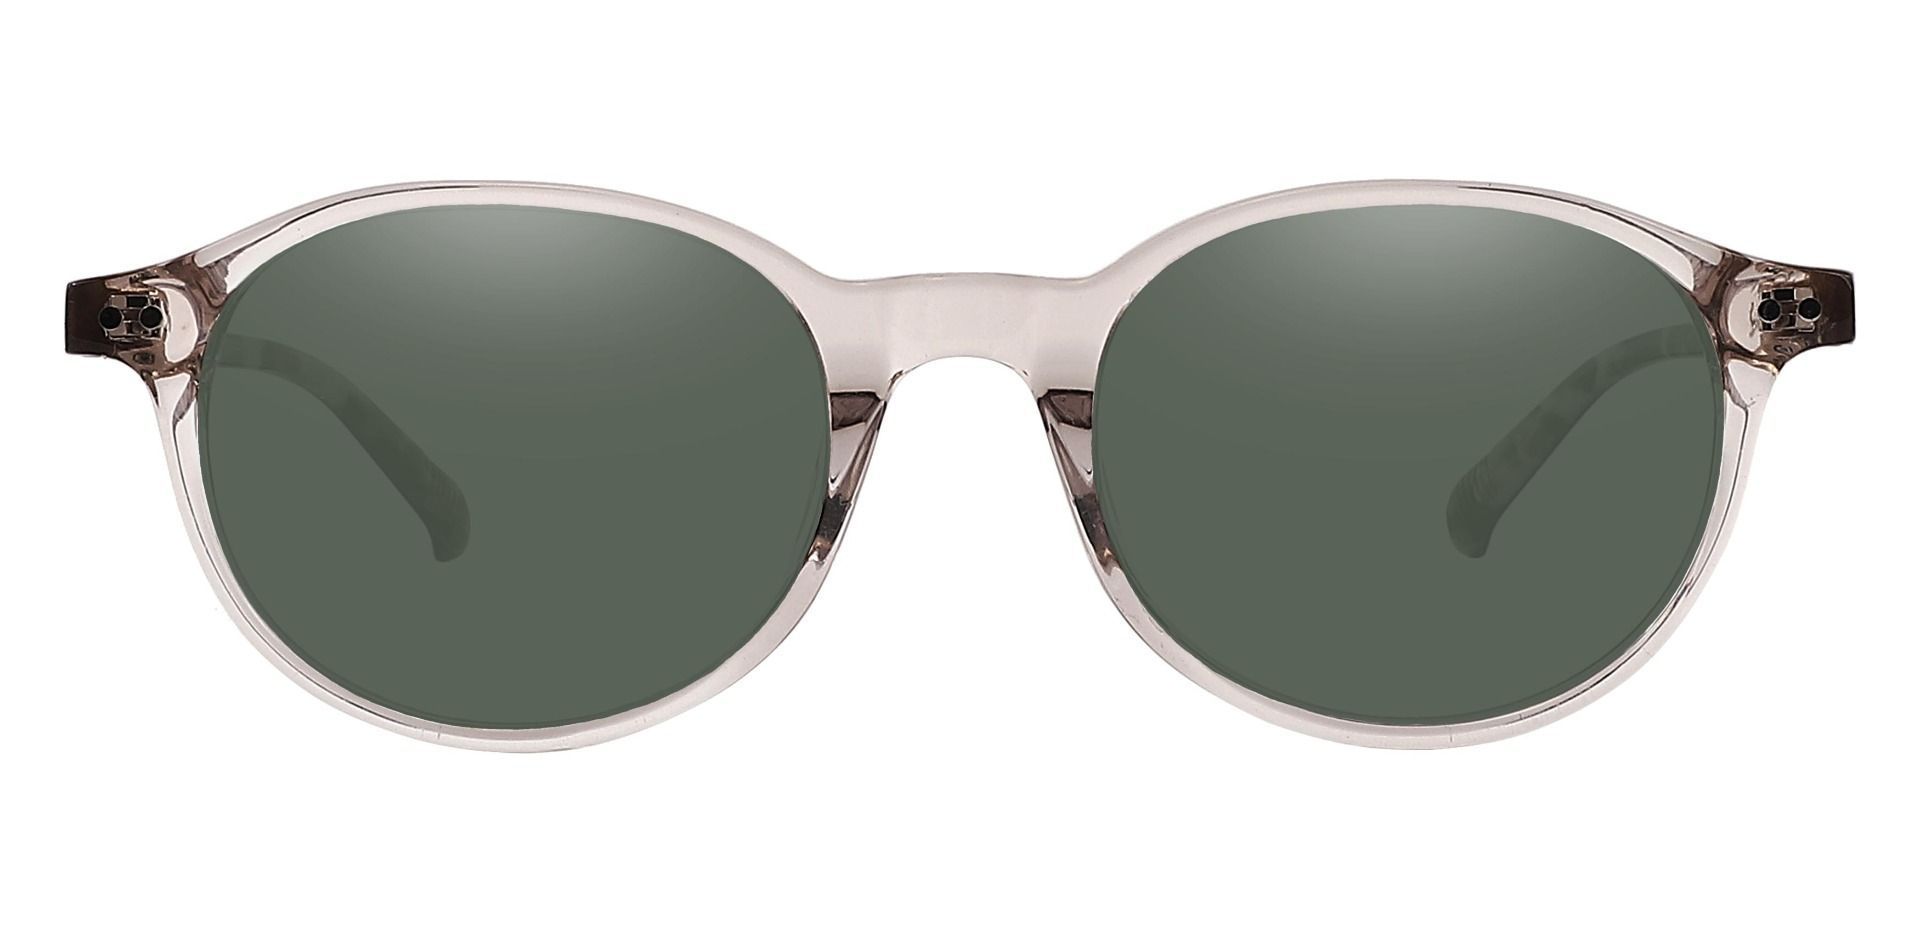 Avon Oval Prescription Sunglasses - Clear Frame With Green Lenses